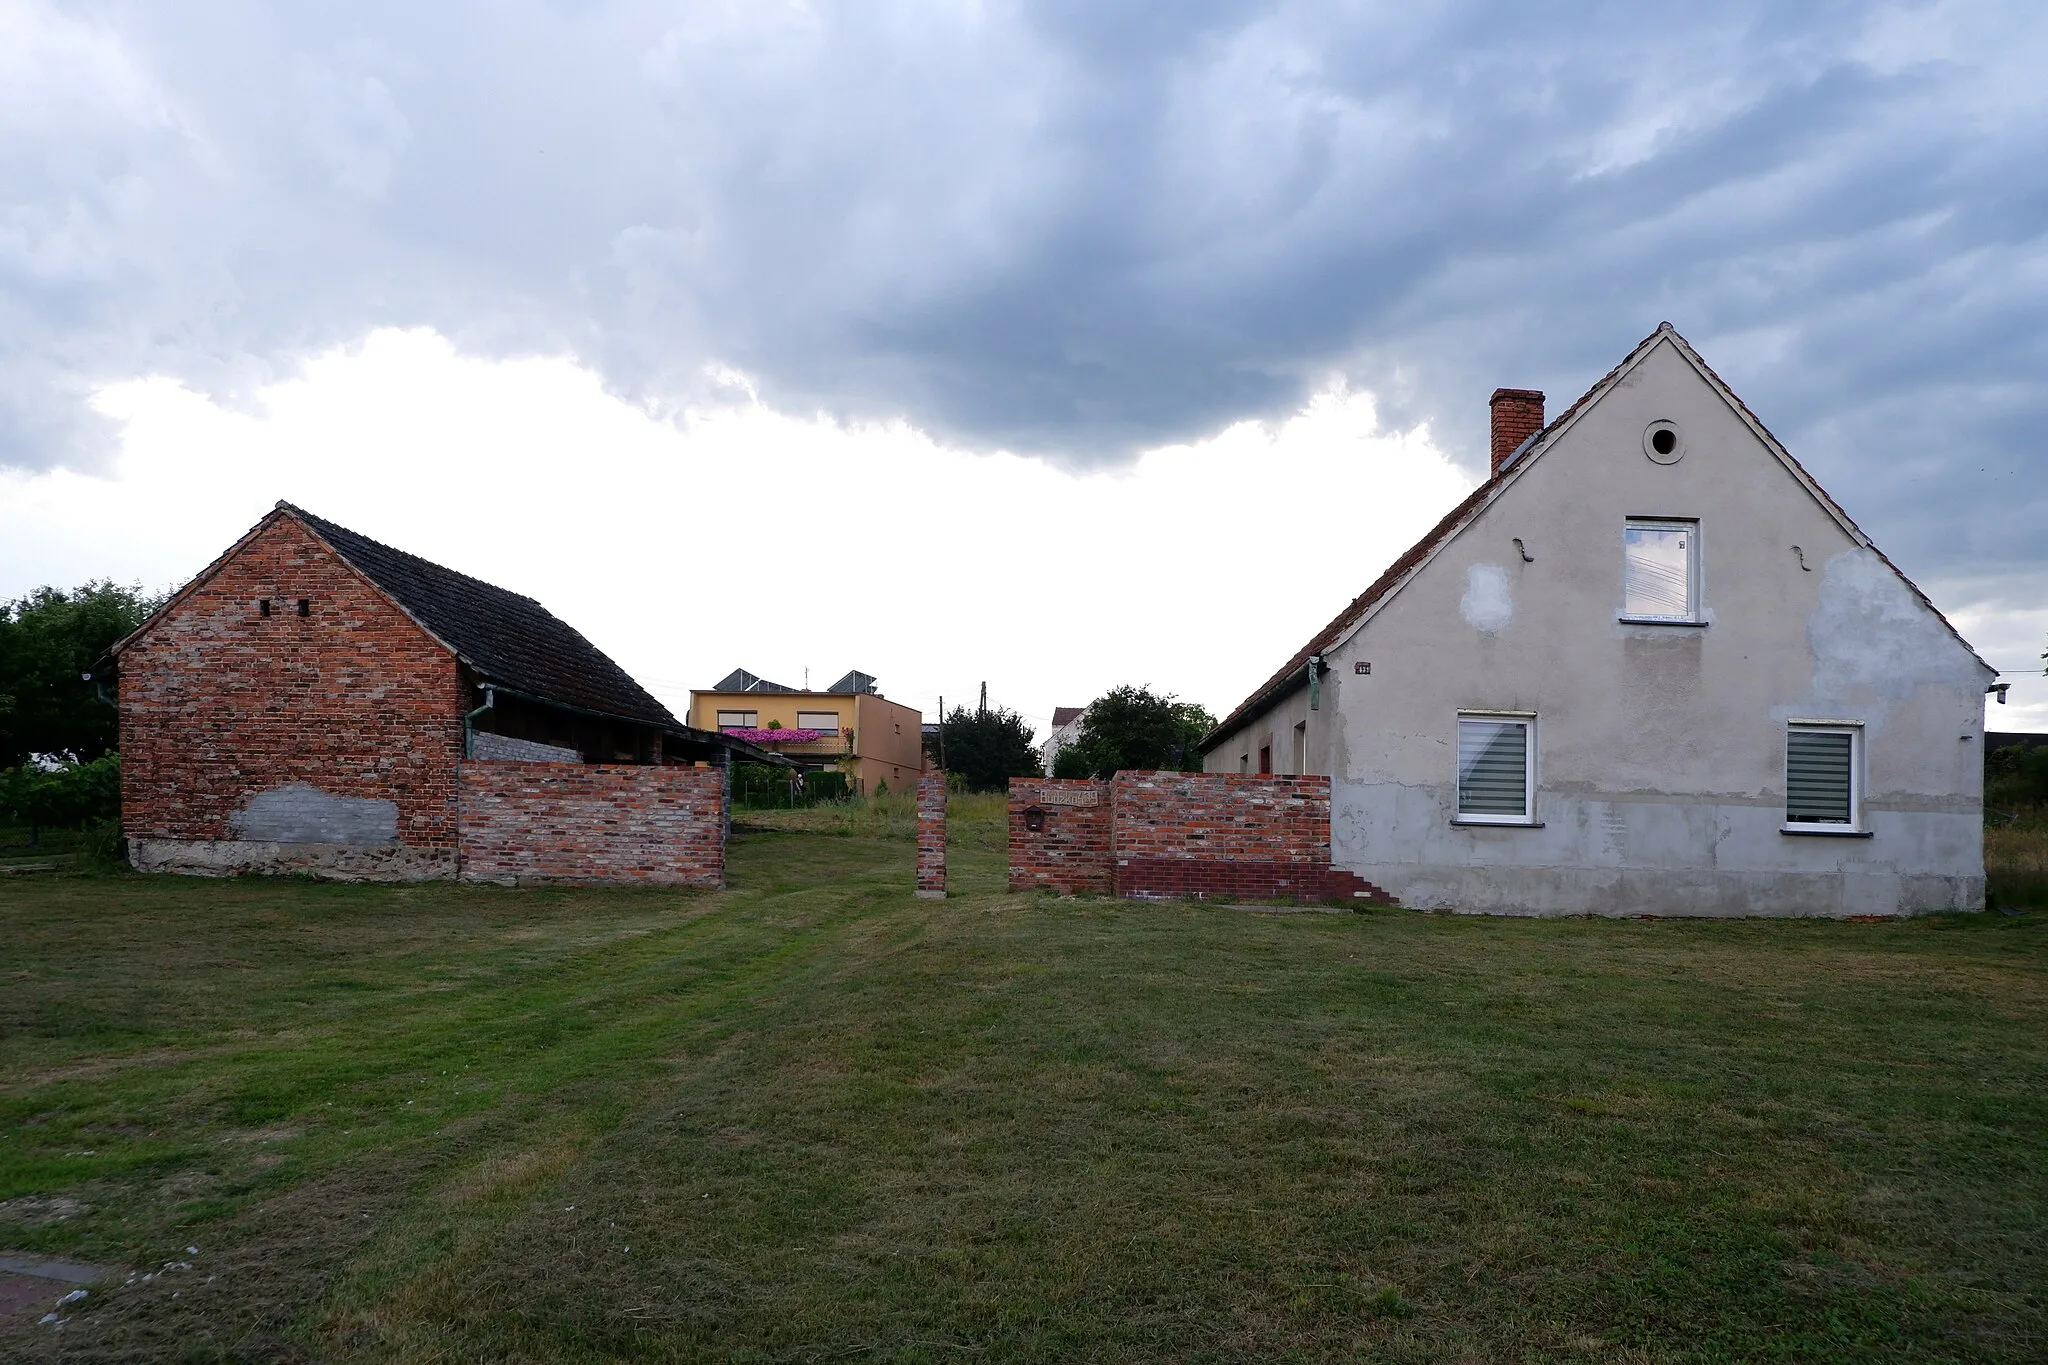 Photo showing: 439 Rudzka Street in Stodoły, a district of Rybnik, Upper Silesia, Poland